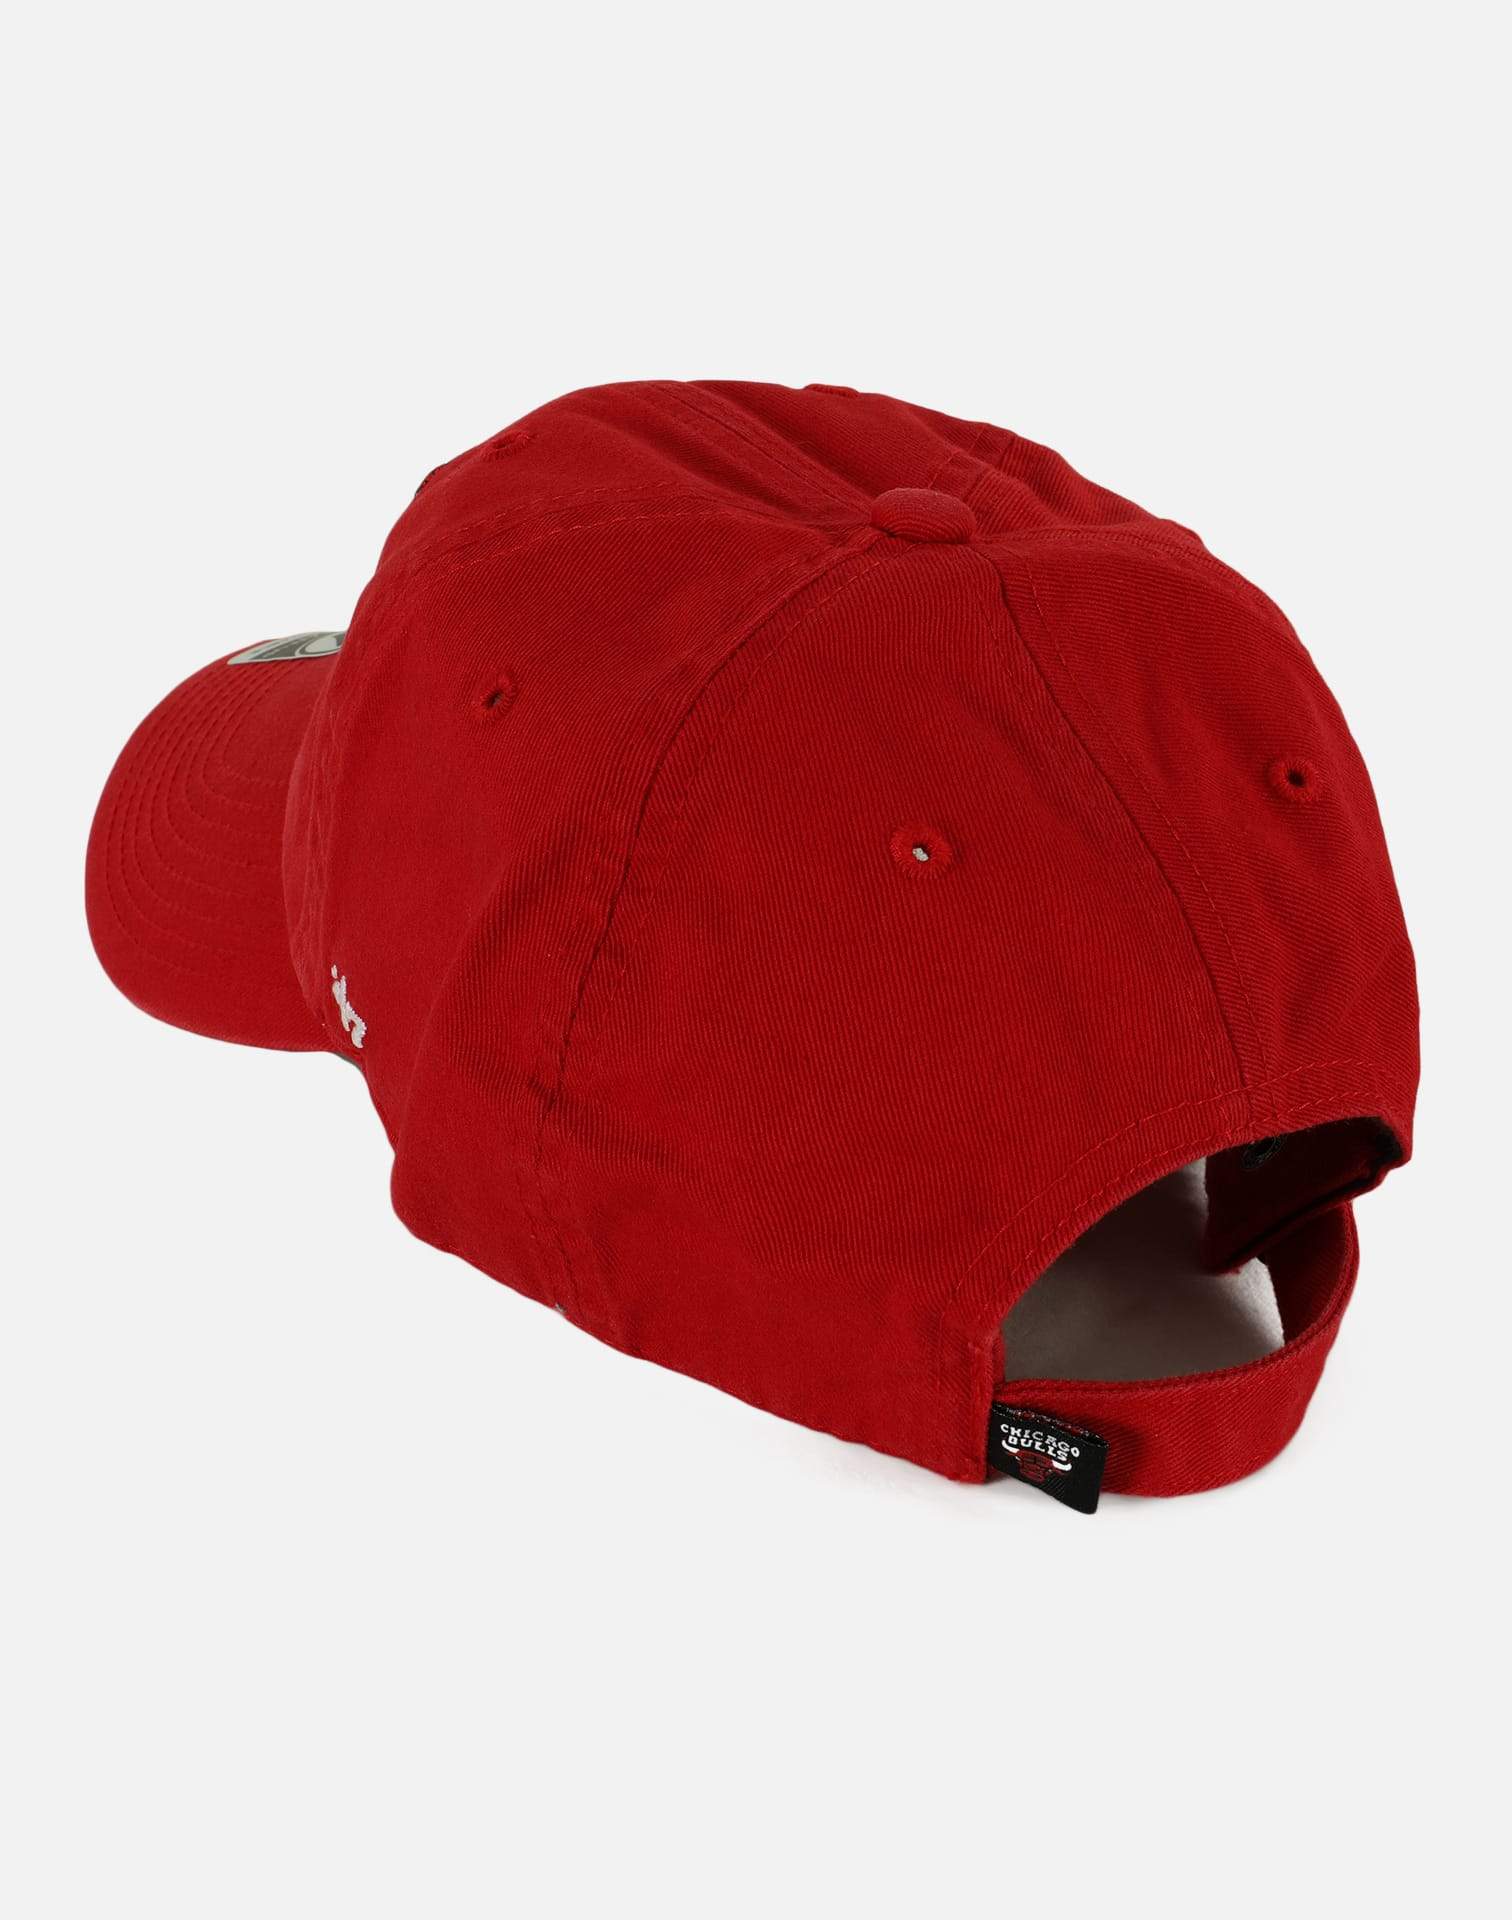 Chicago Bulls '47 Team Clean Up Adjustable Hat - Red